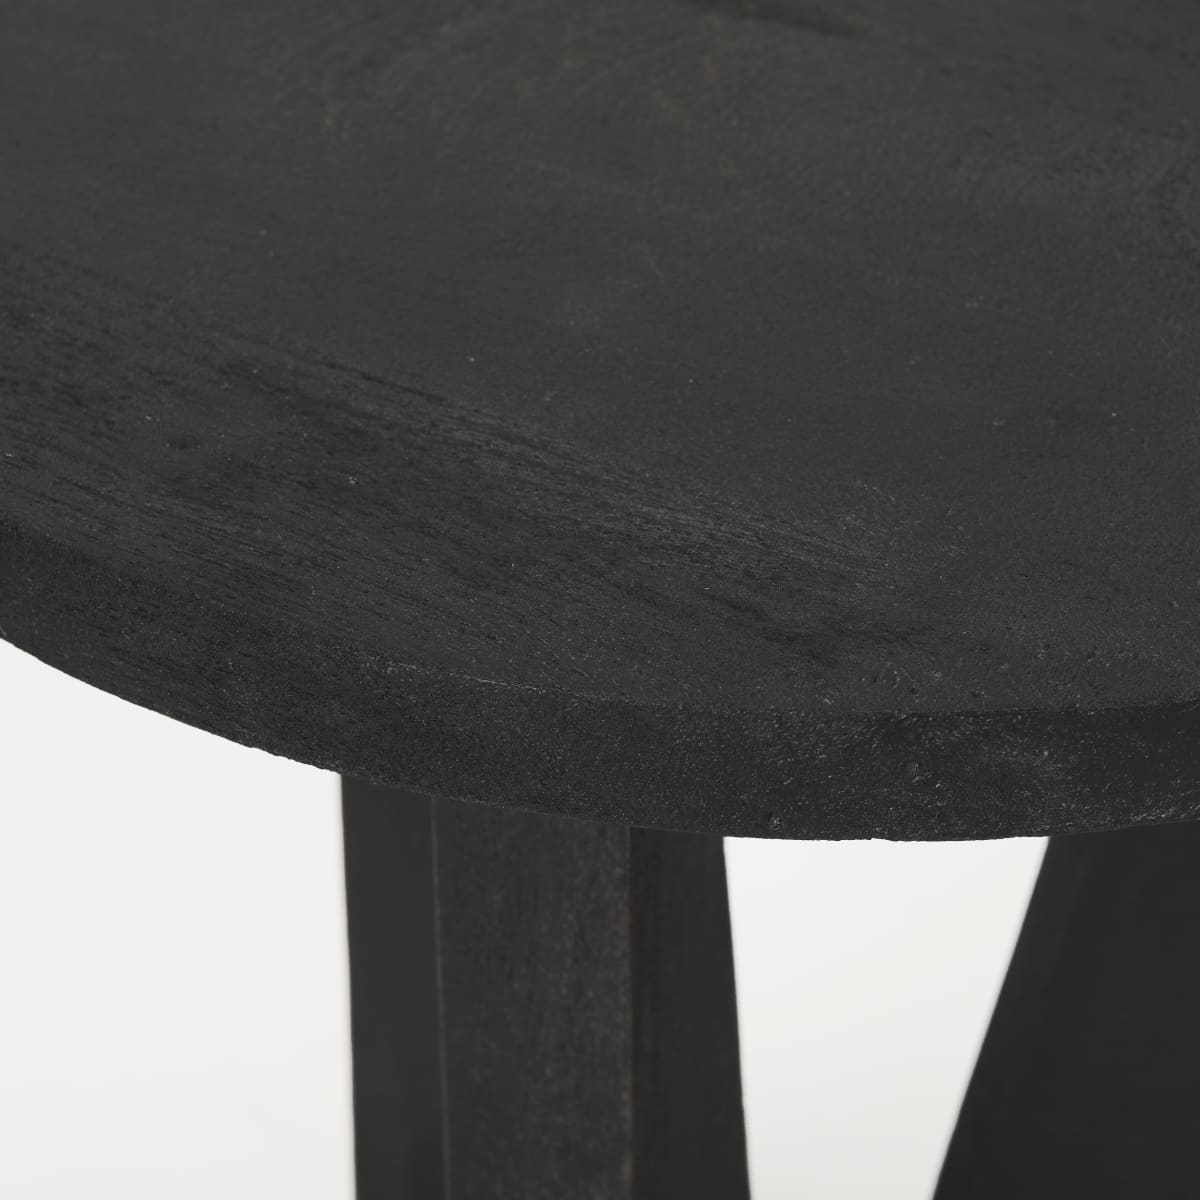 Mattius Accent Table Black Wood - accent-tables